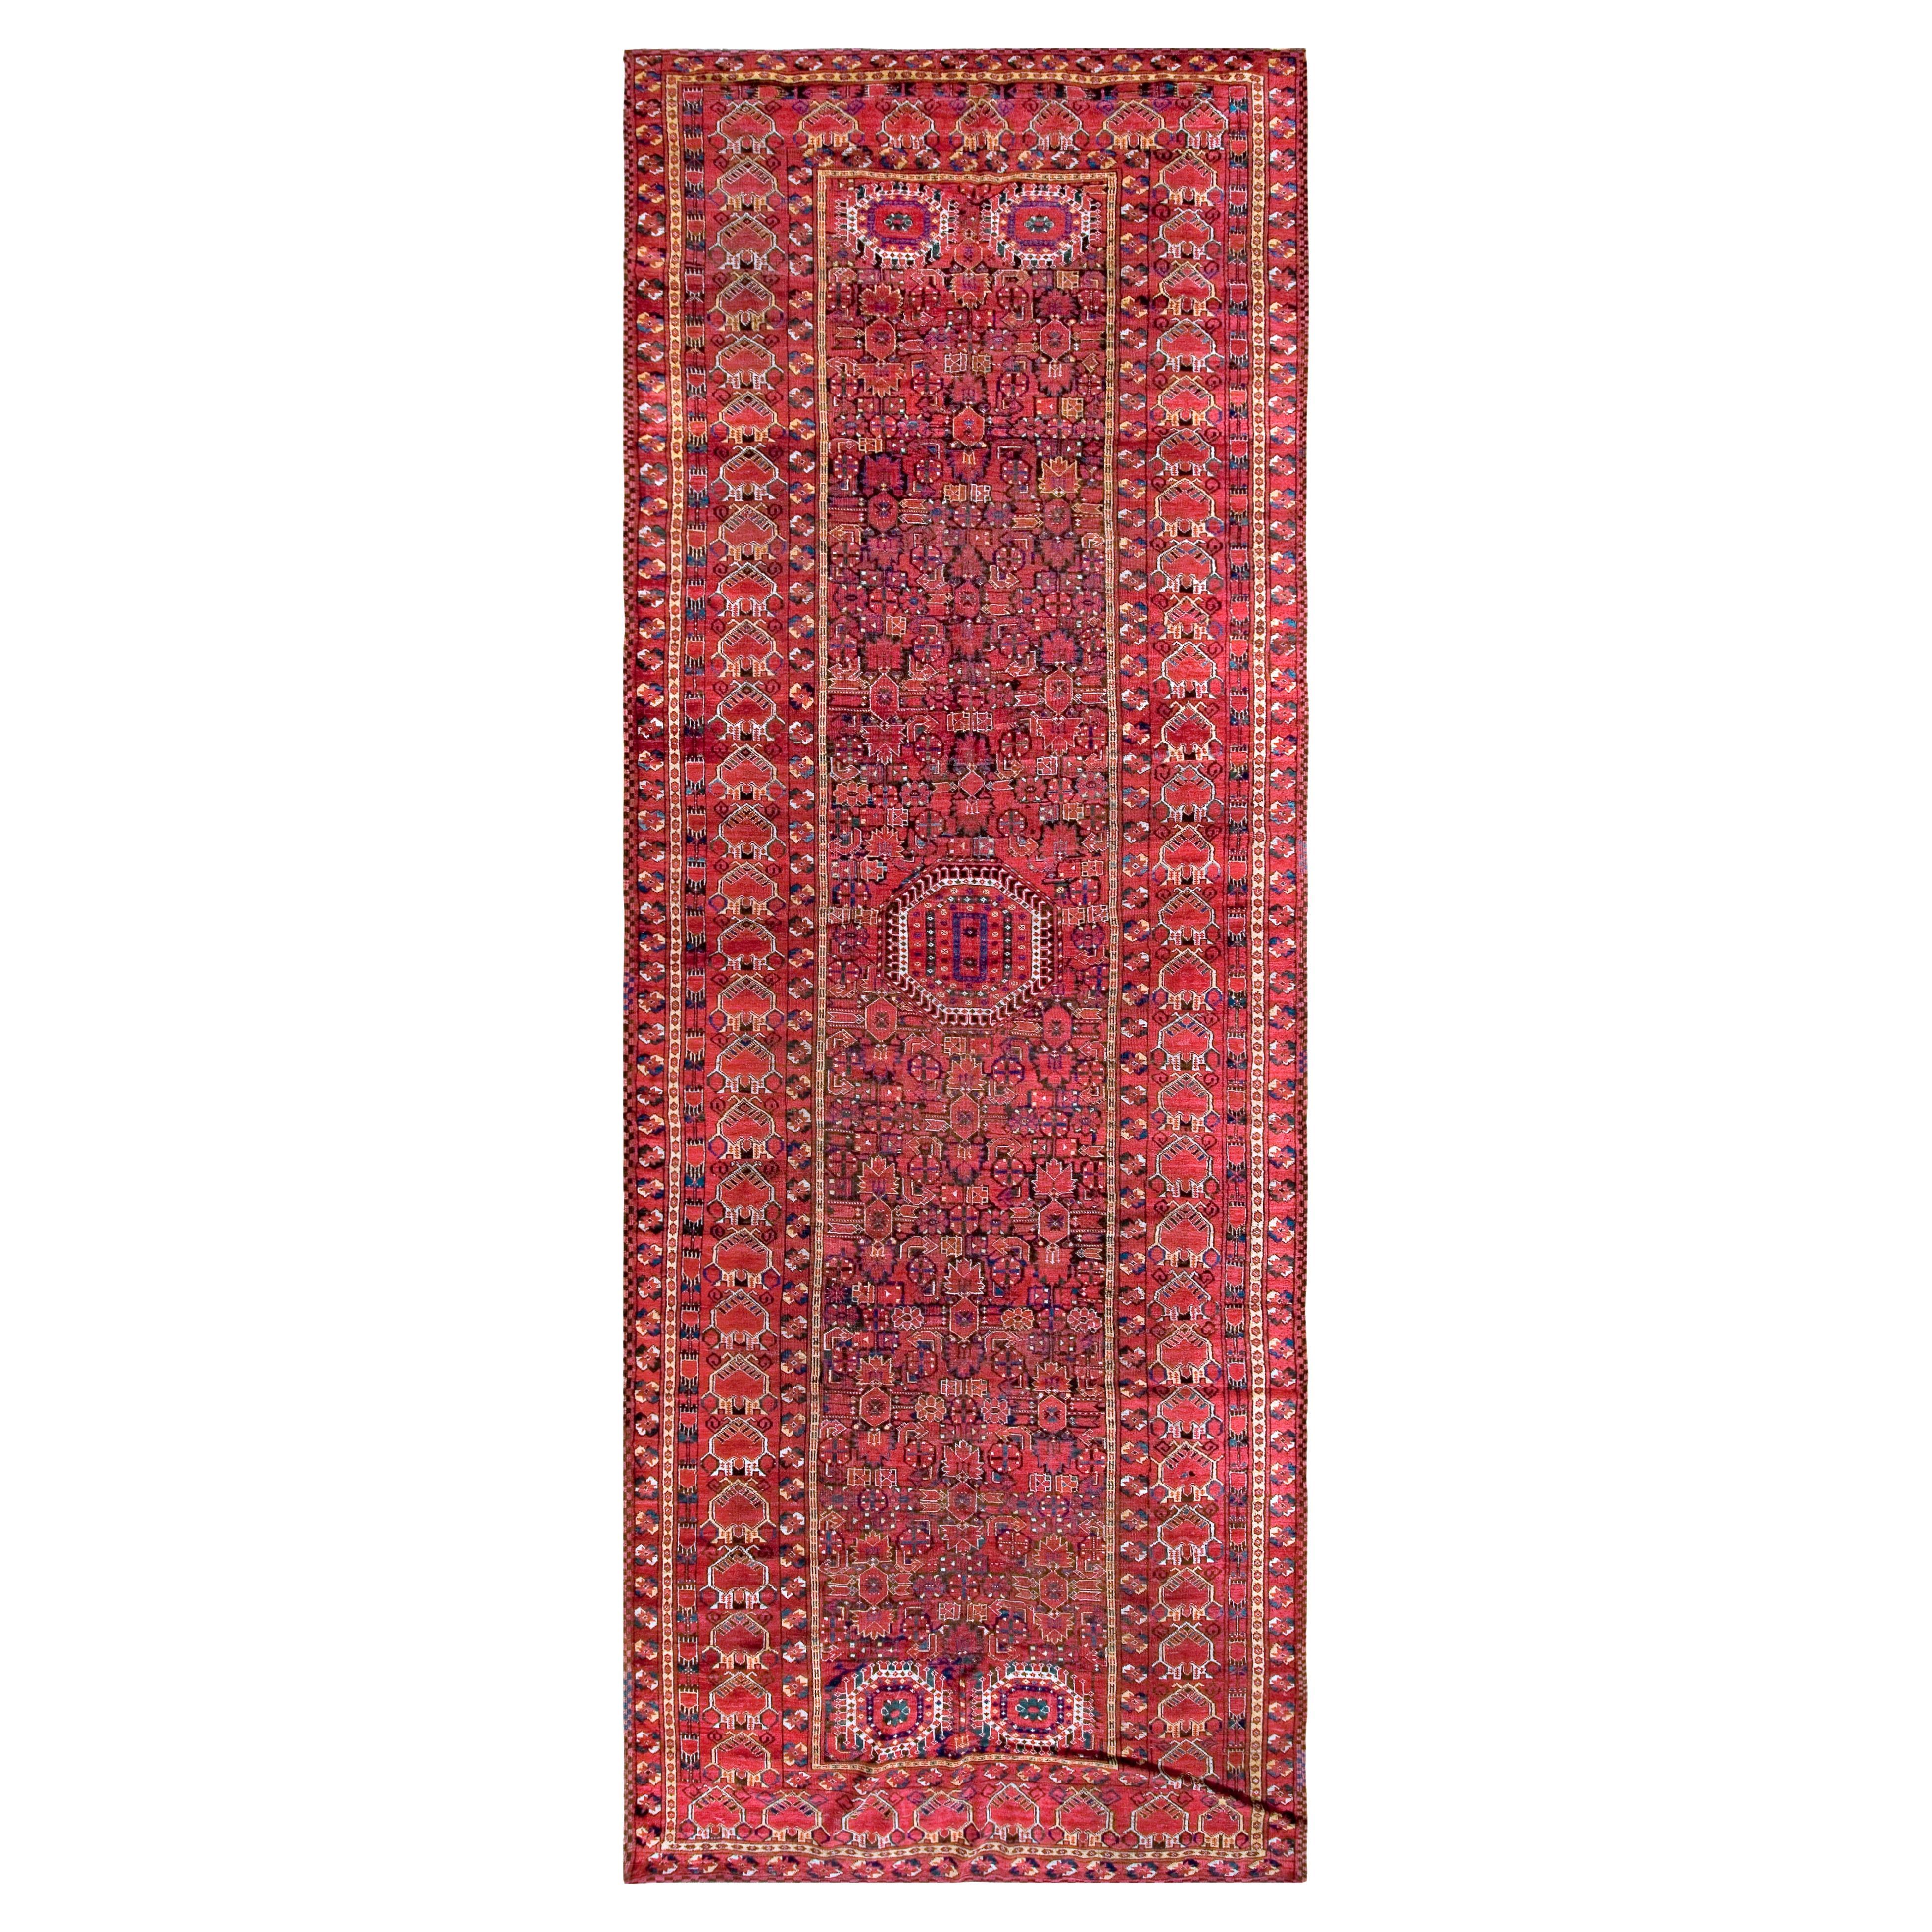 19th Century Central Asian Ersari-Beshir Gallery Carpet (6'6"x18'-198x548)   For Sale